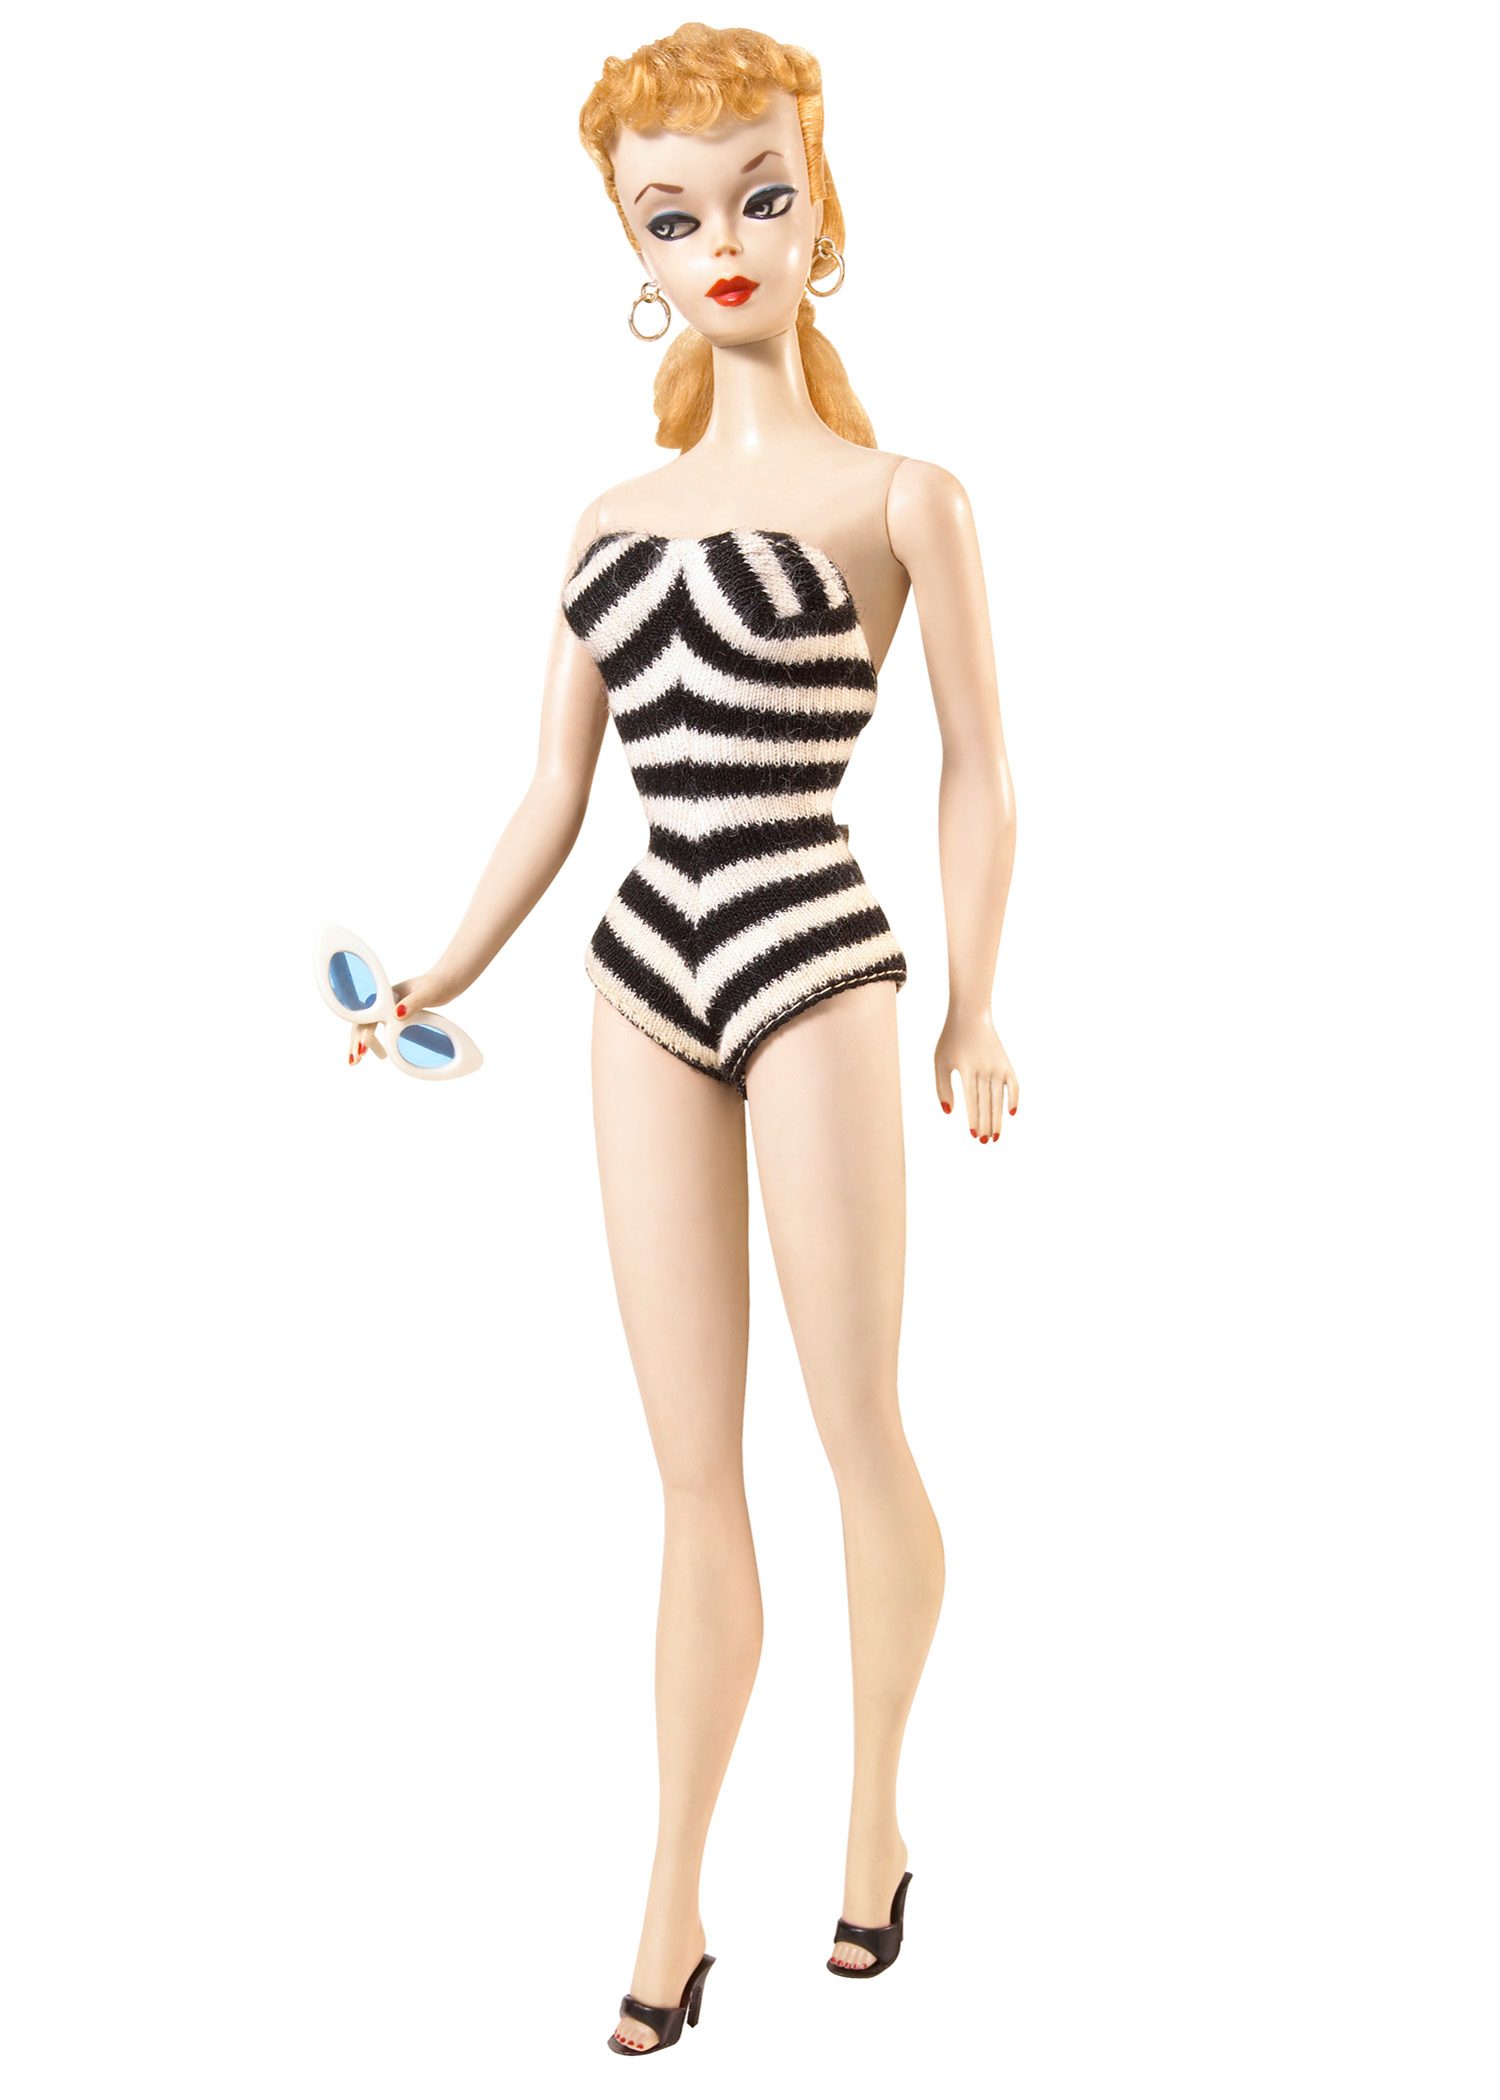 Vintage 1950s/1960s Mattel Barbie Dolls & Clothing Accessories W